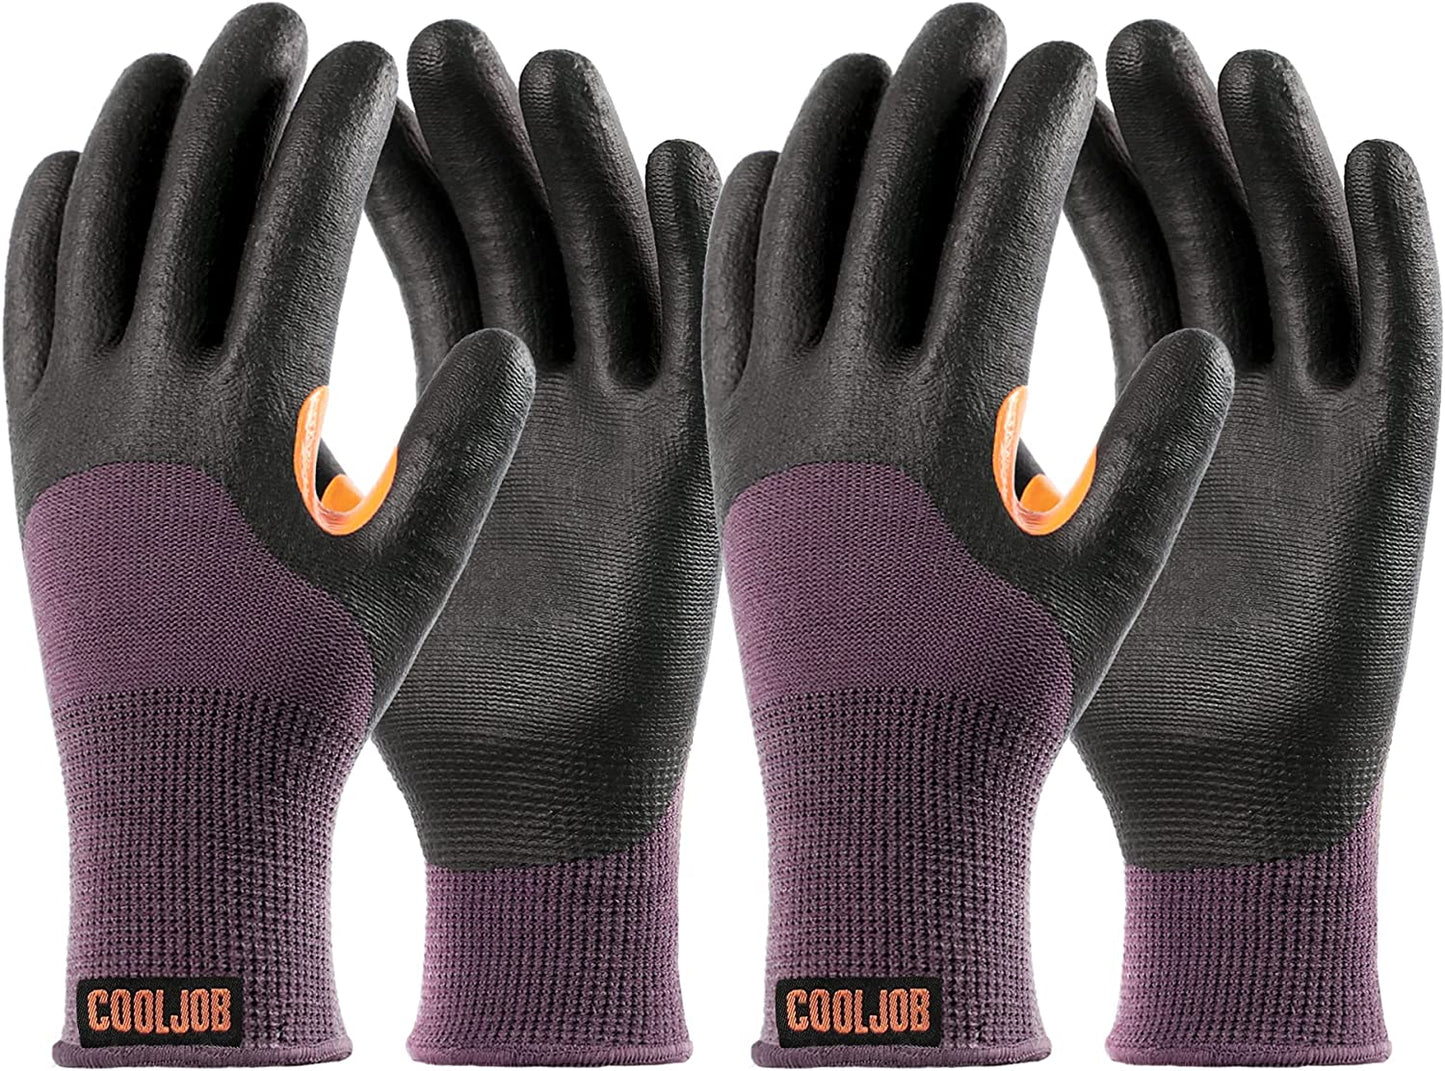 Reinforced Winter Work Gloves